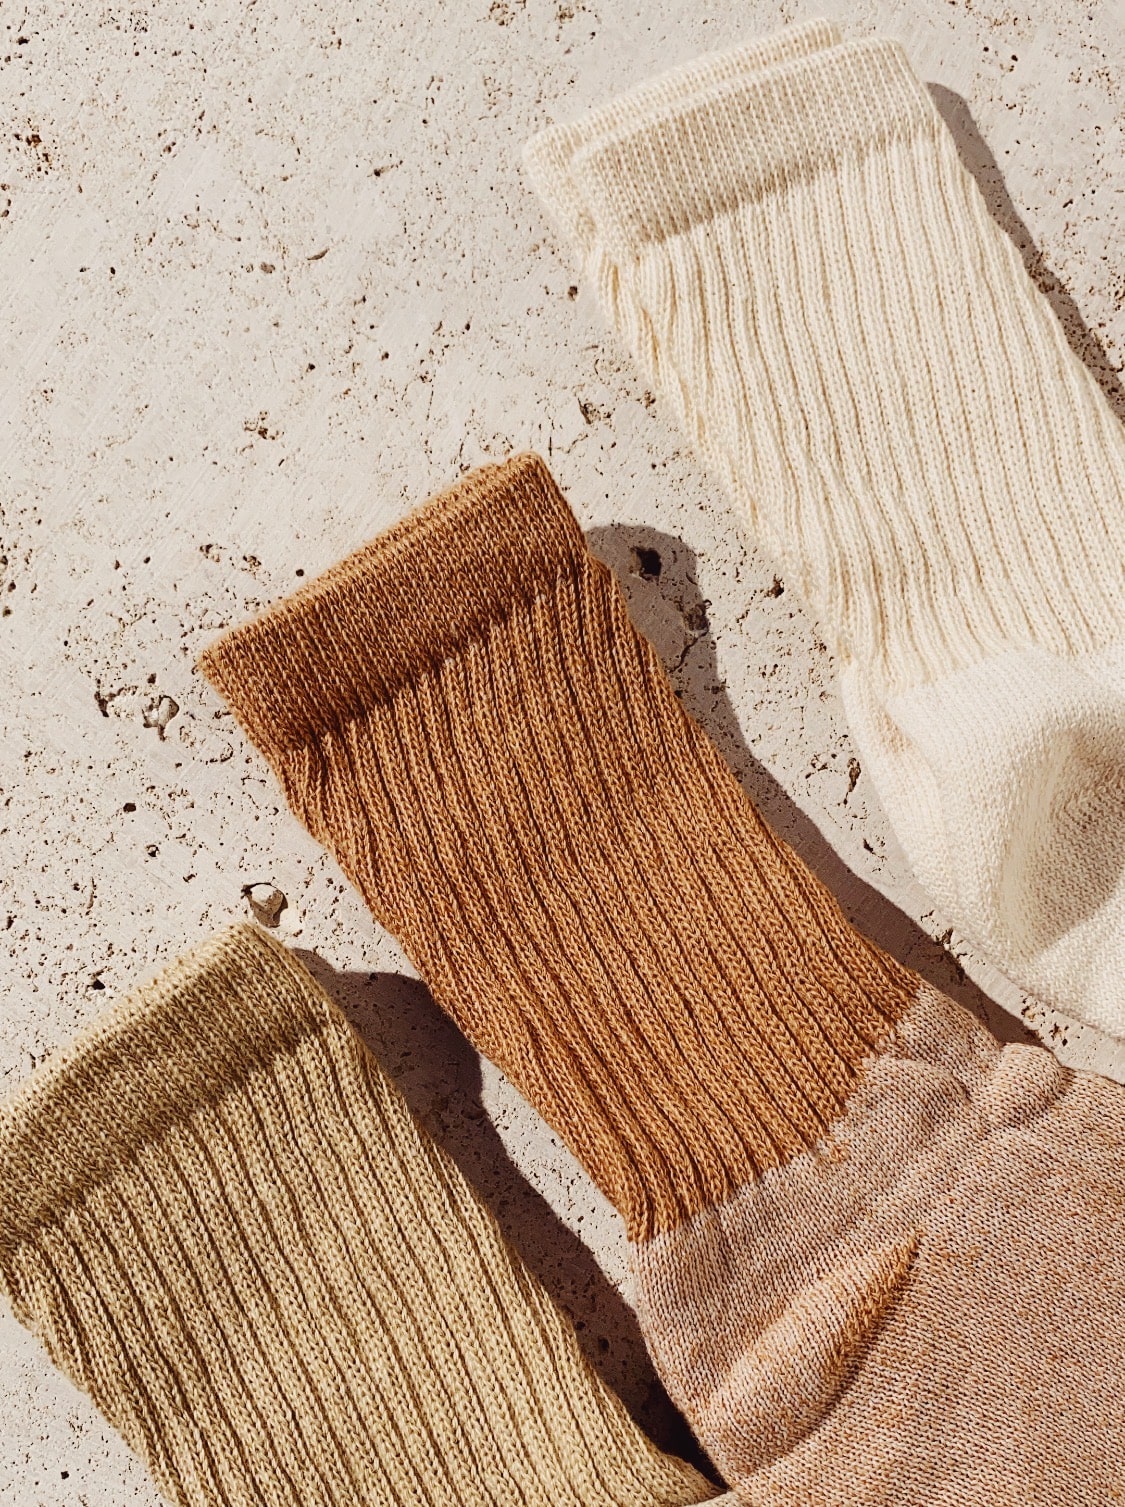 organic cotton socks - 3 pack